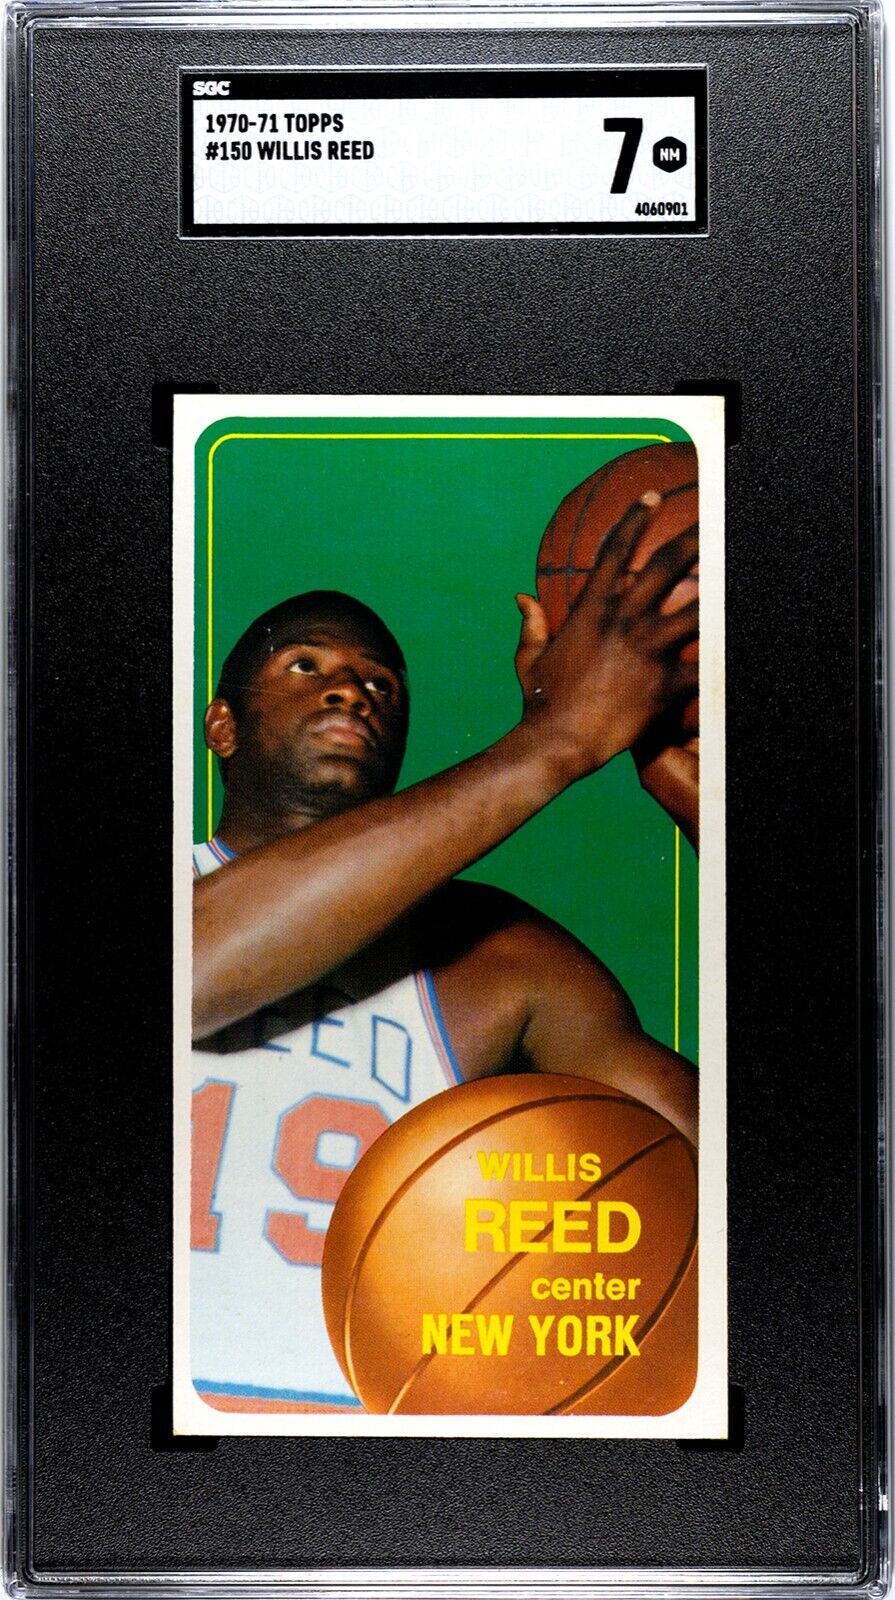 Willis Reed 1970-71 Topps Card #150- SGC Graded 7 NM (New York Knicks) Image 1